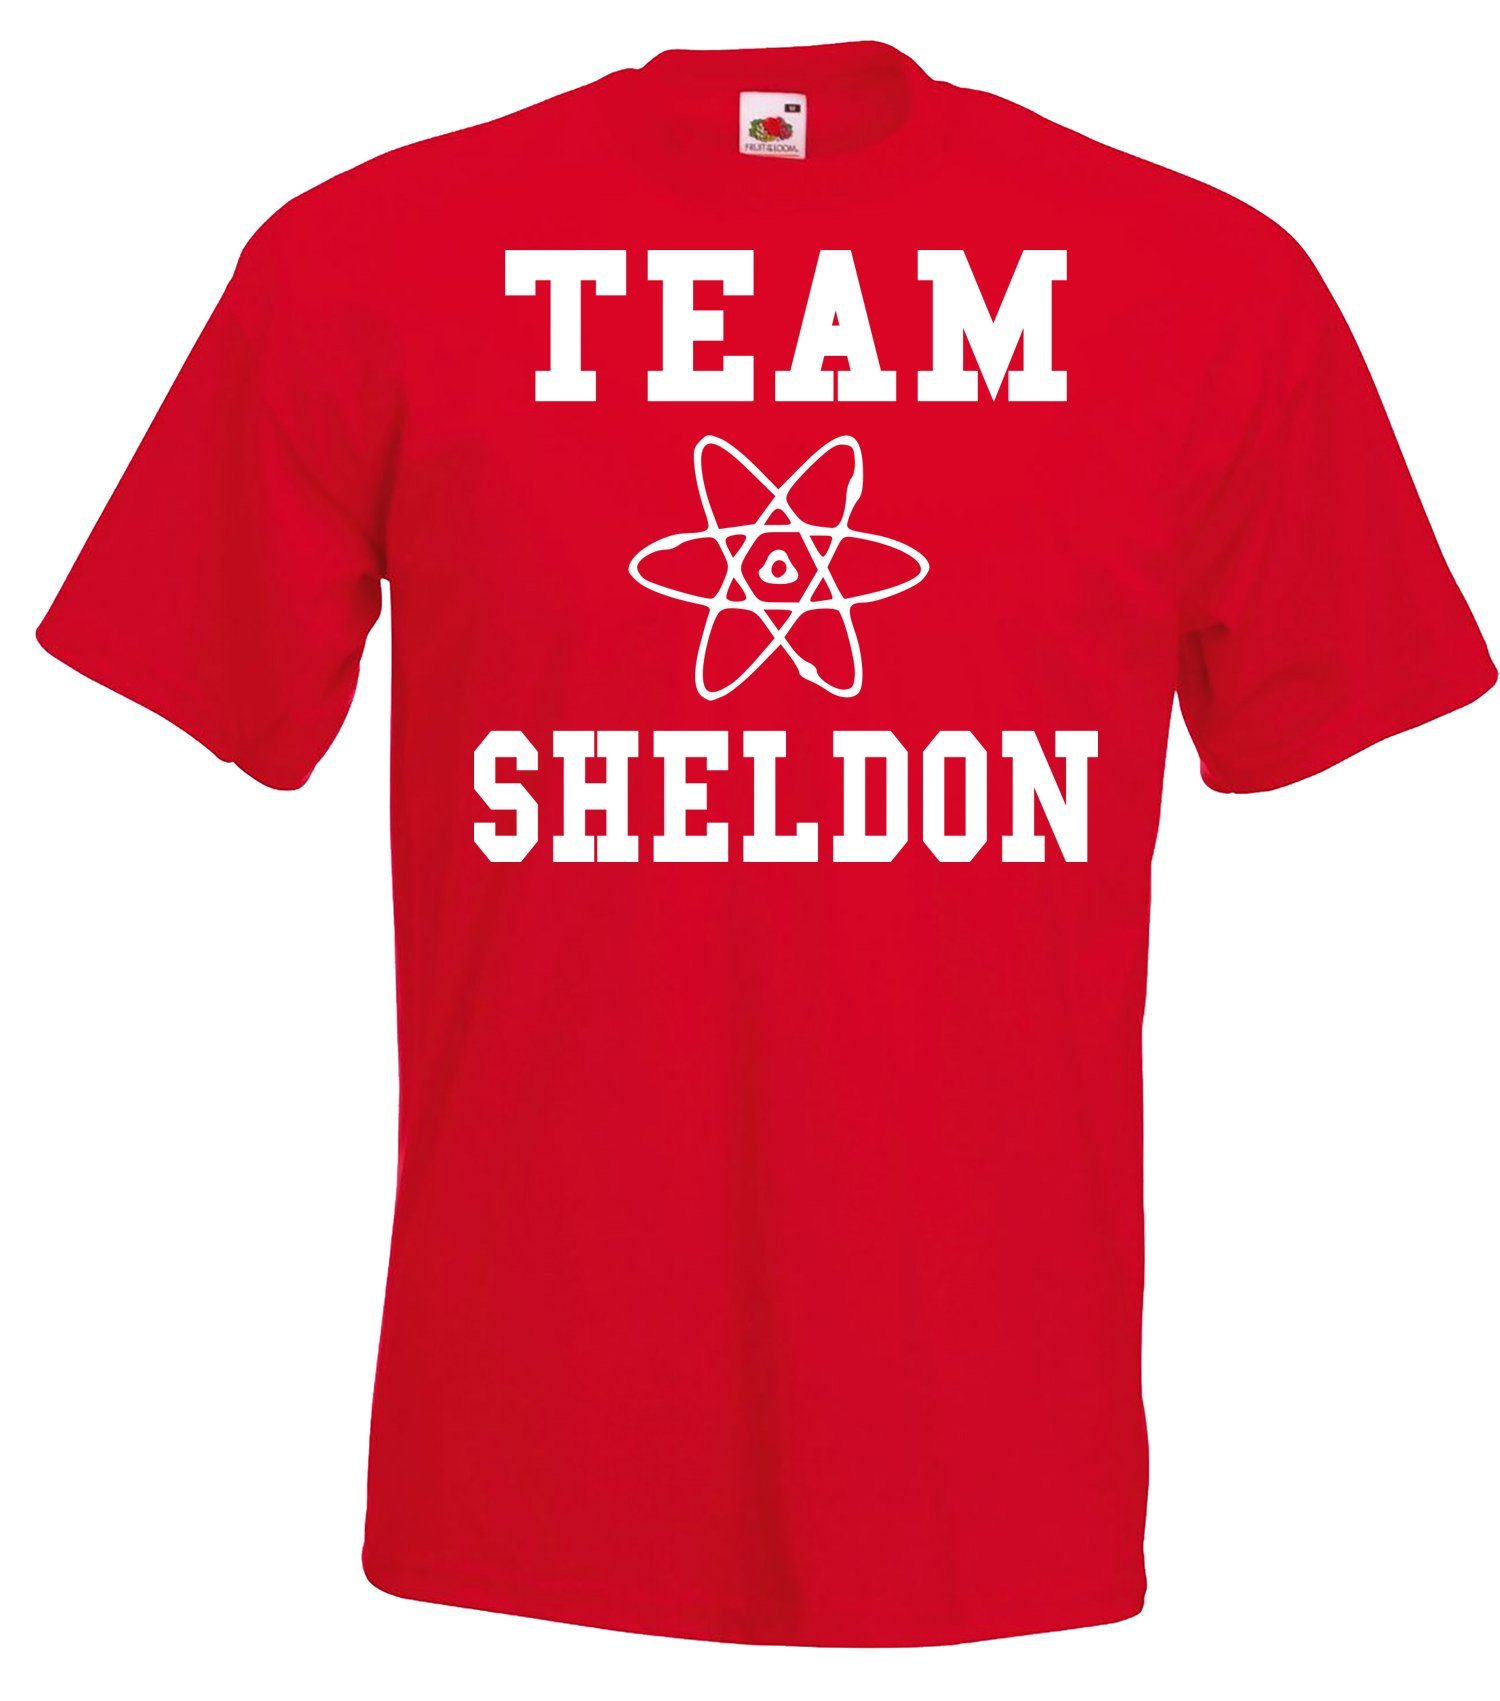 Team mit Navyblau Herren T-Shirt Designz Youth Sheldon trendigem Motiv T-Shirt